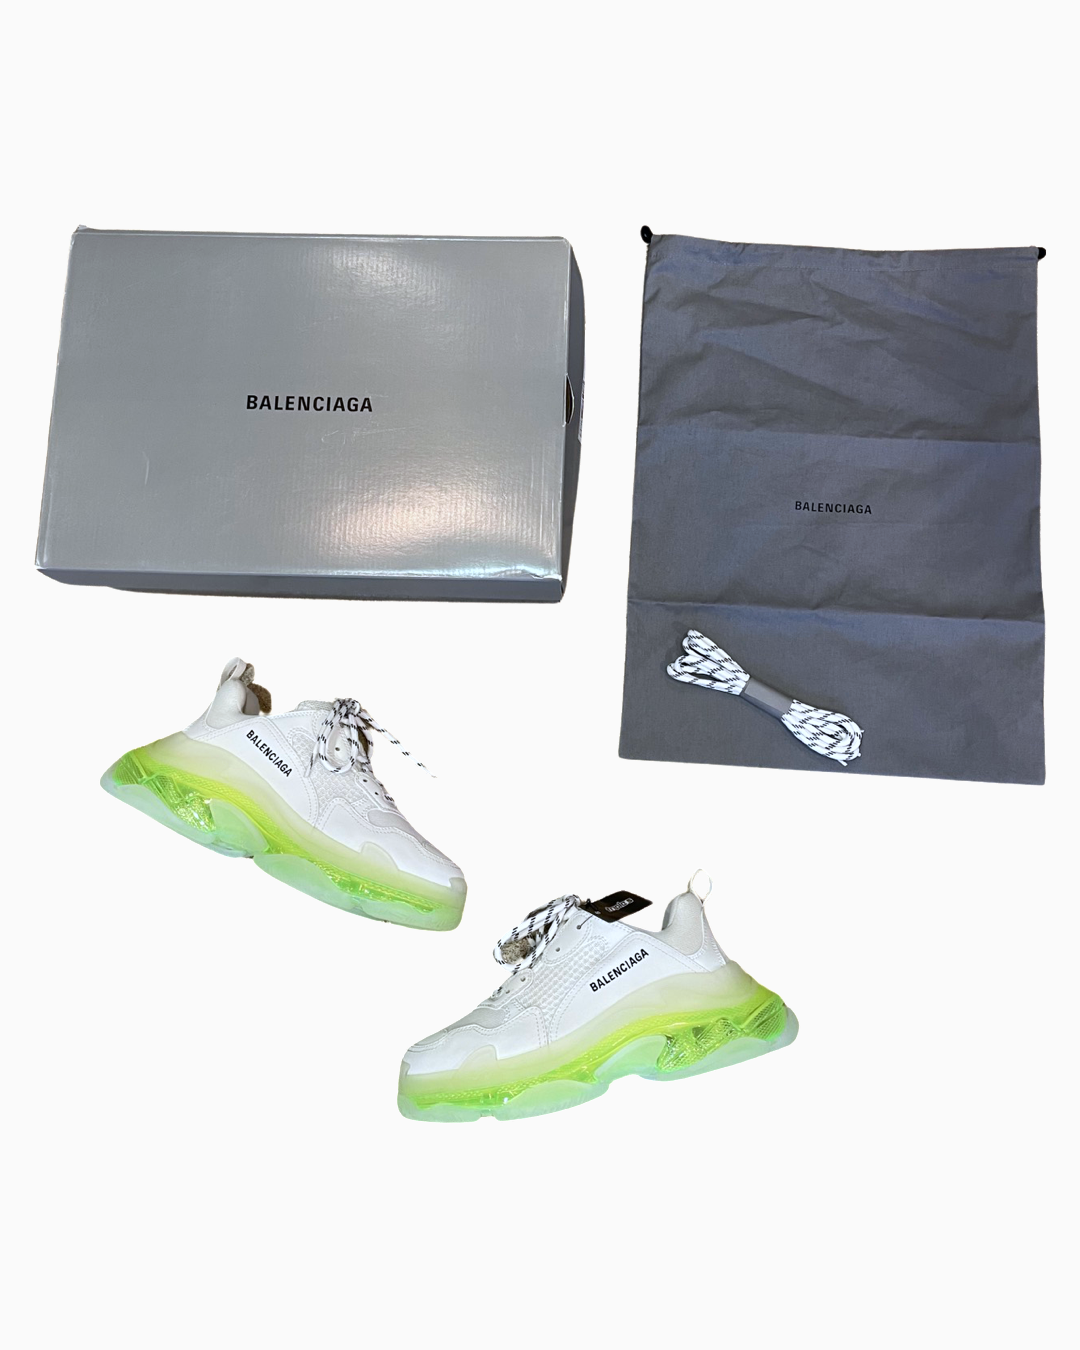 Balenciaga Triple S Sneakers on SALE